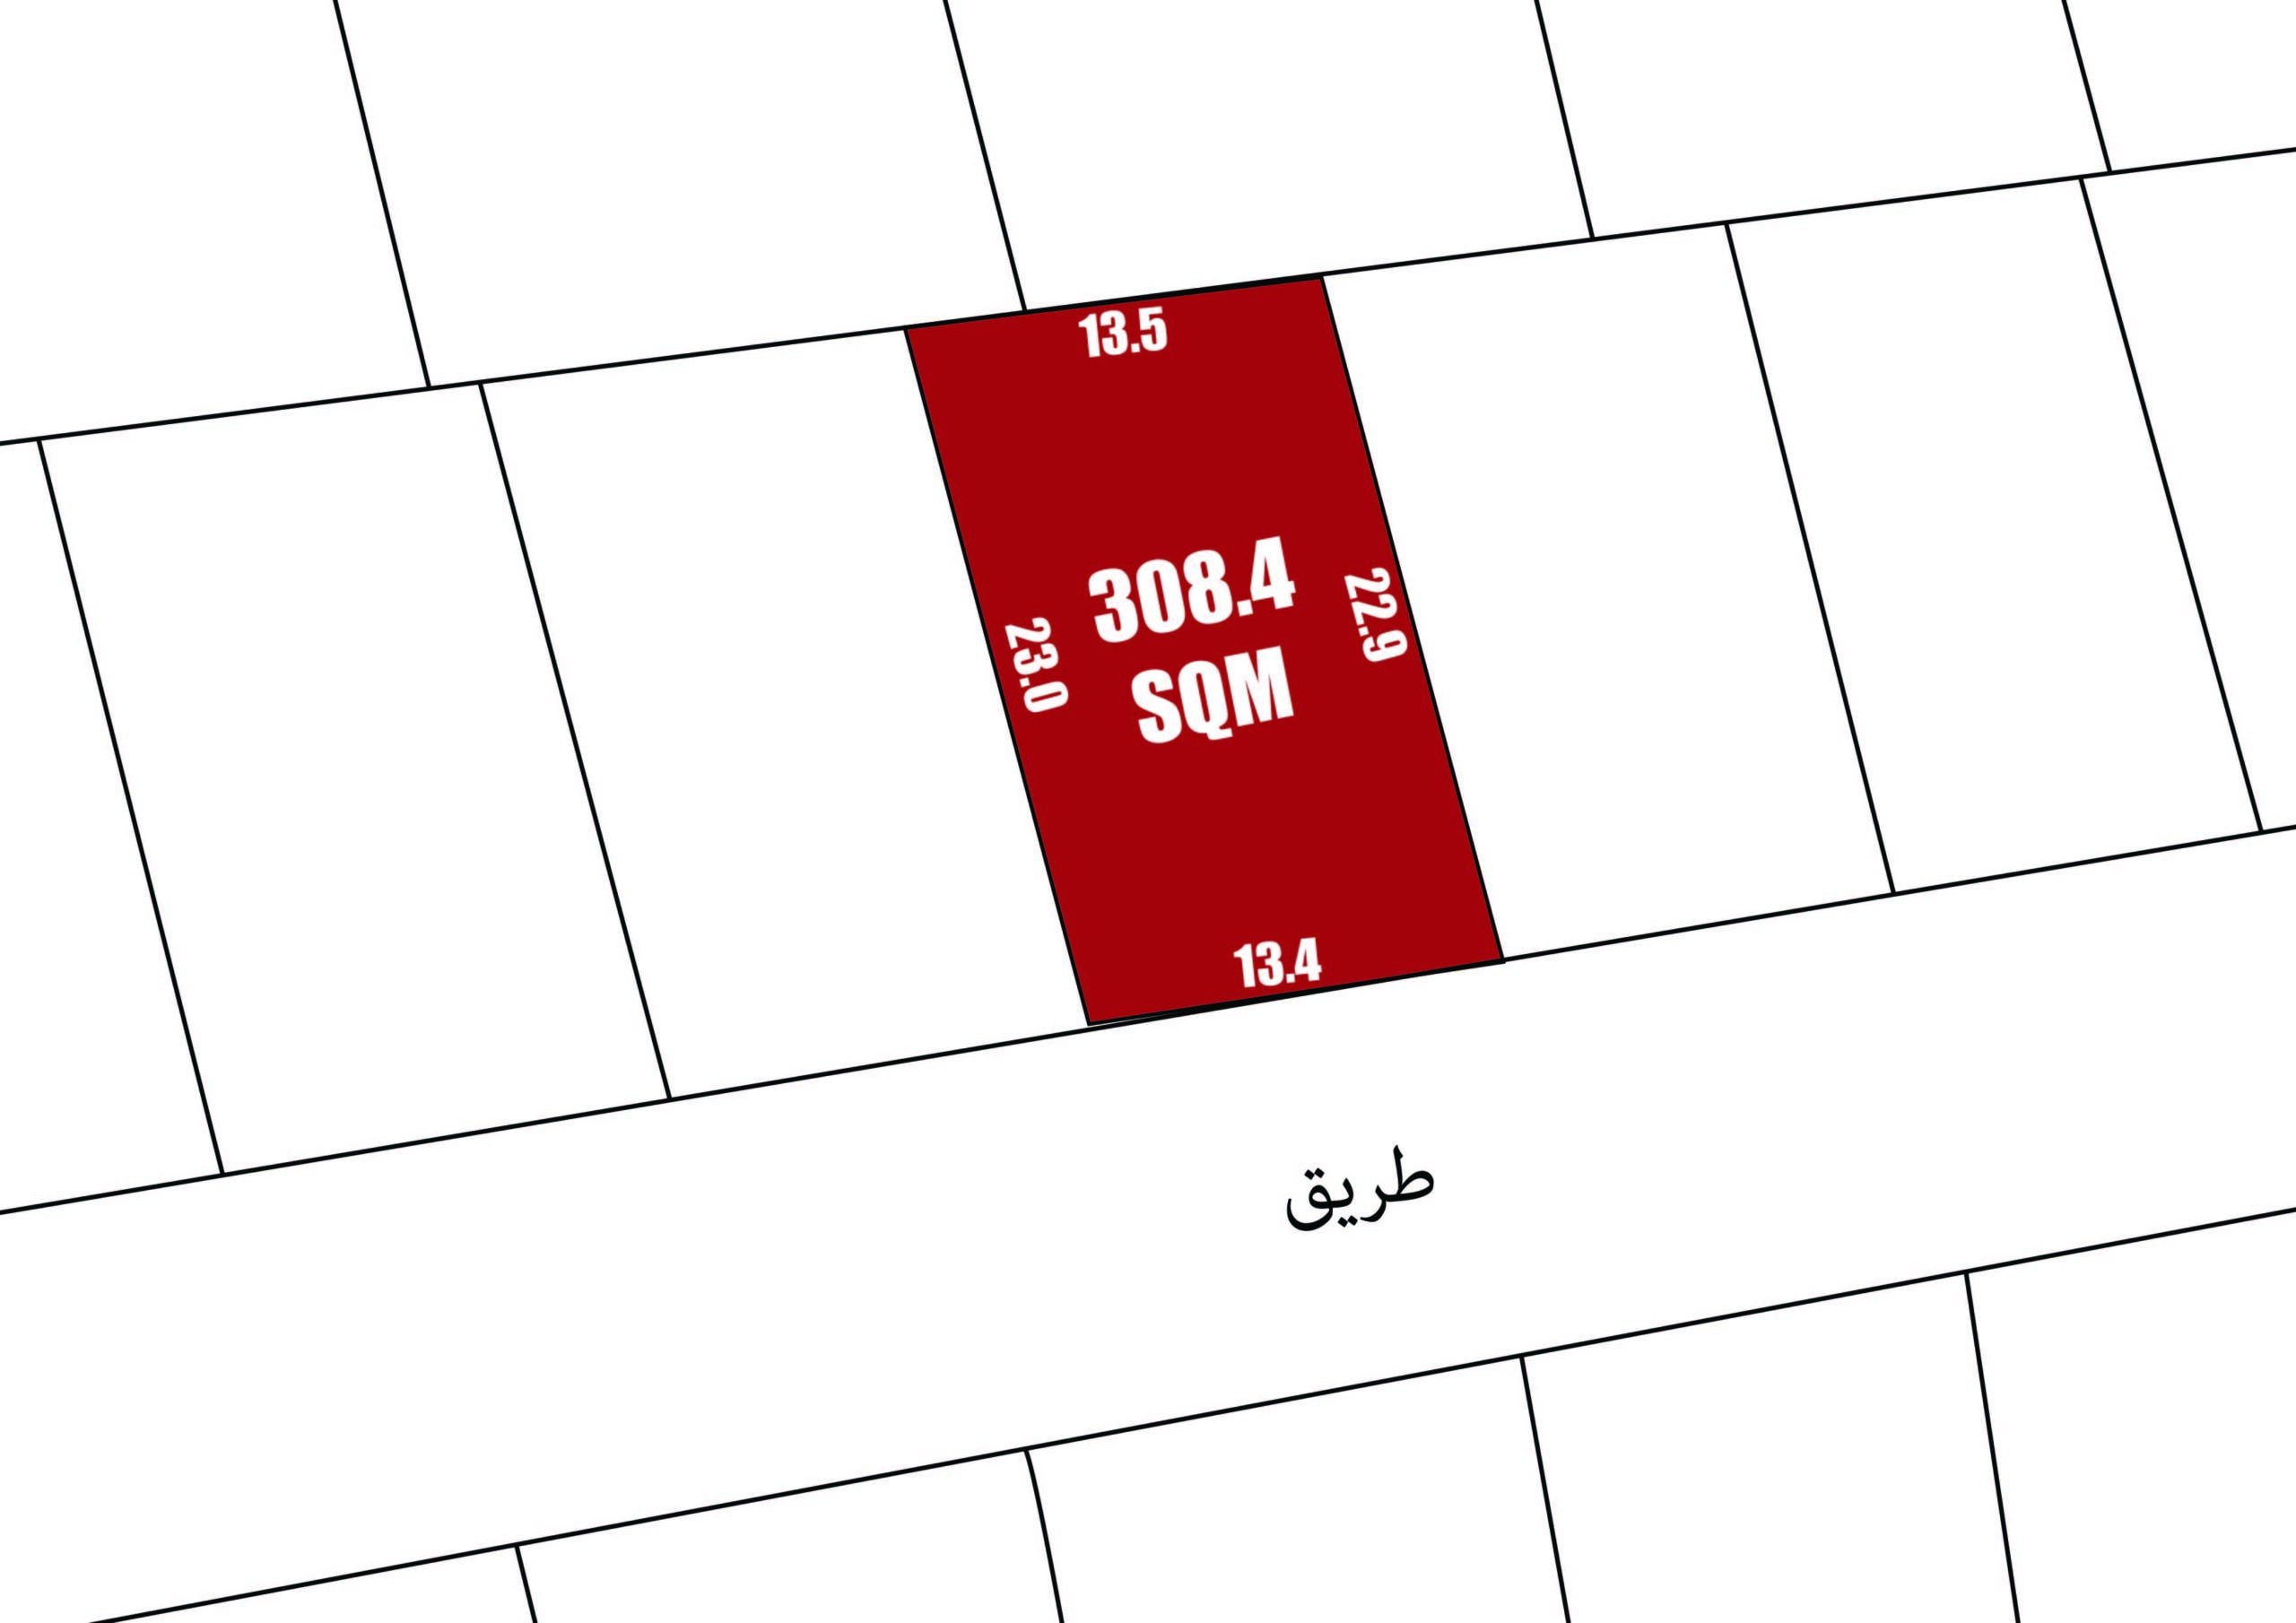 RB Land for Sale in Budaiya - 308.4 SQM | House me